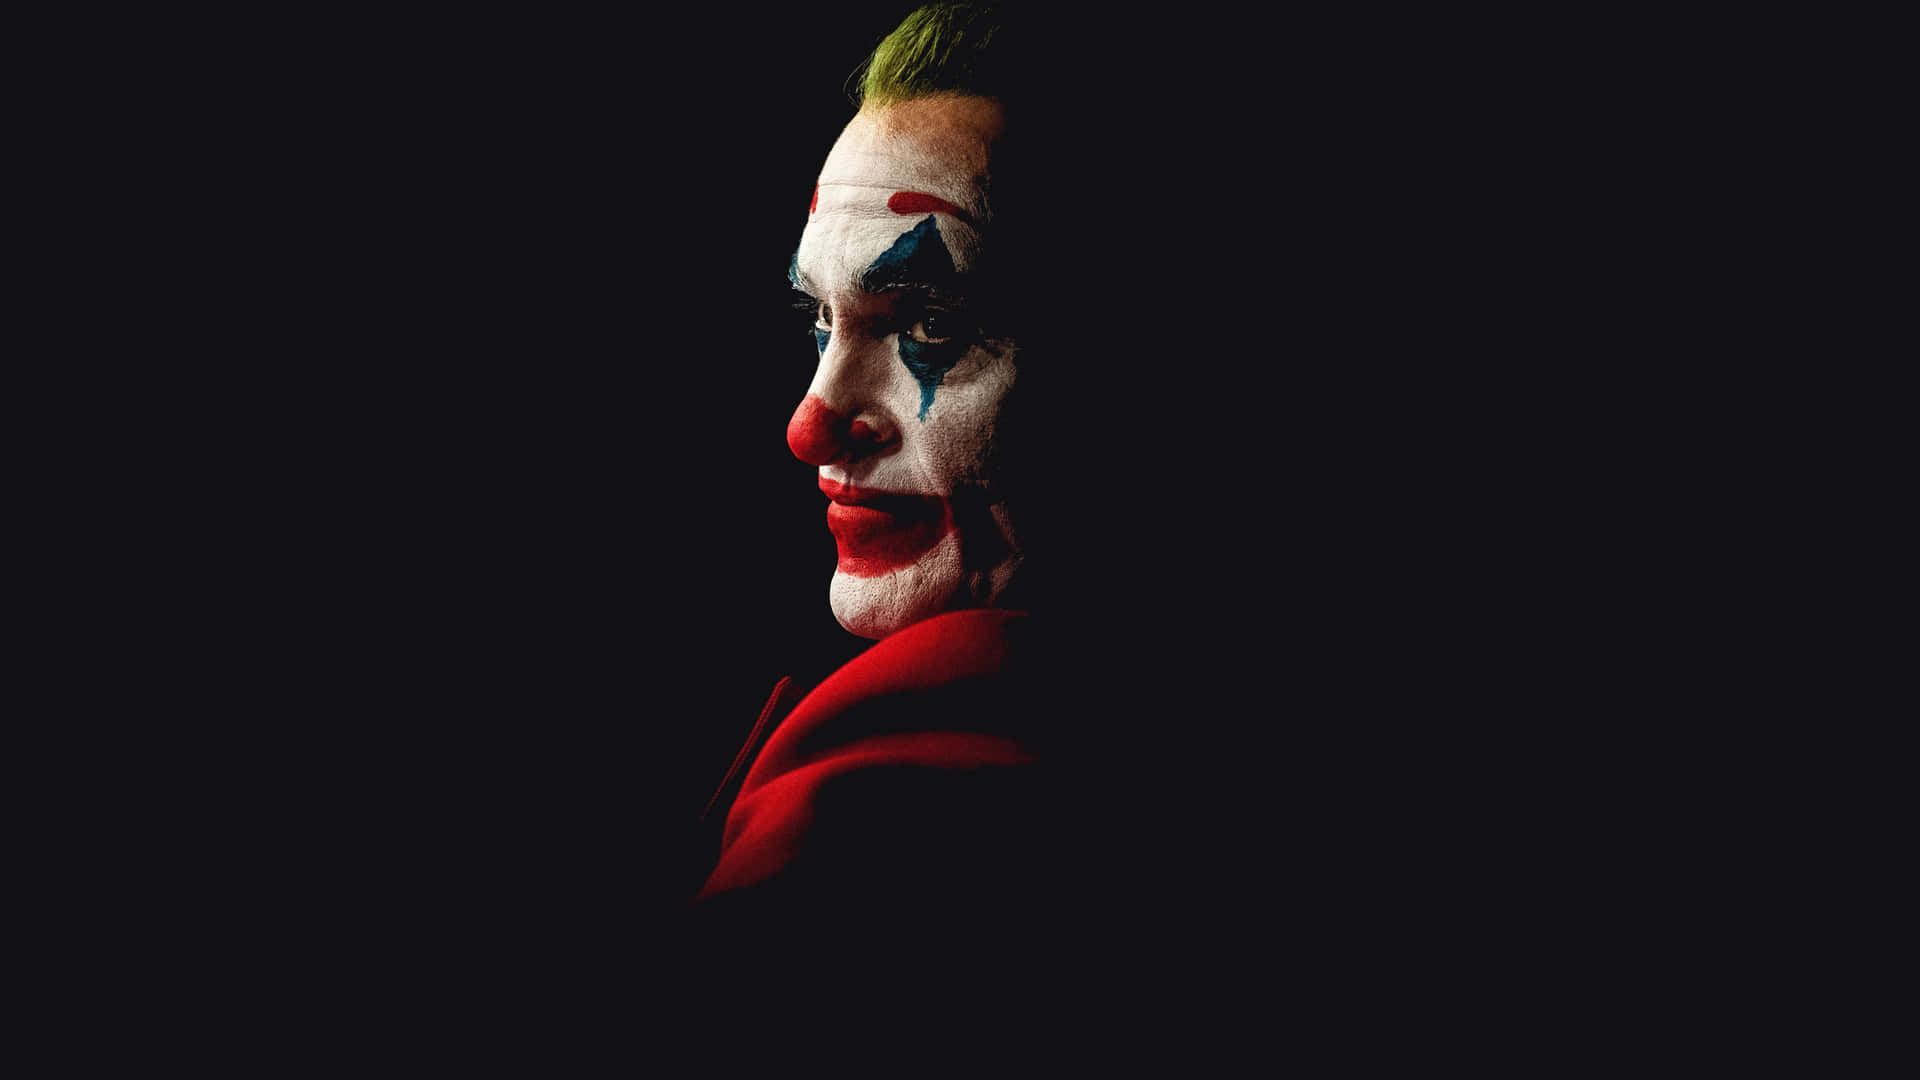 Arthur Fleck standing in his iconic Joker makeup Wallpaper